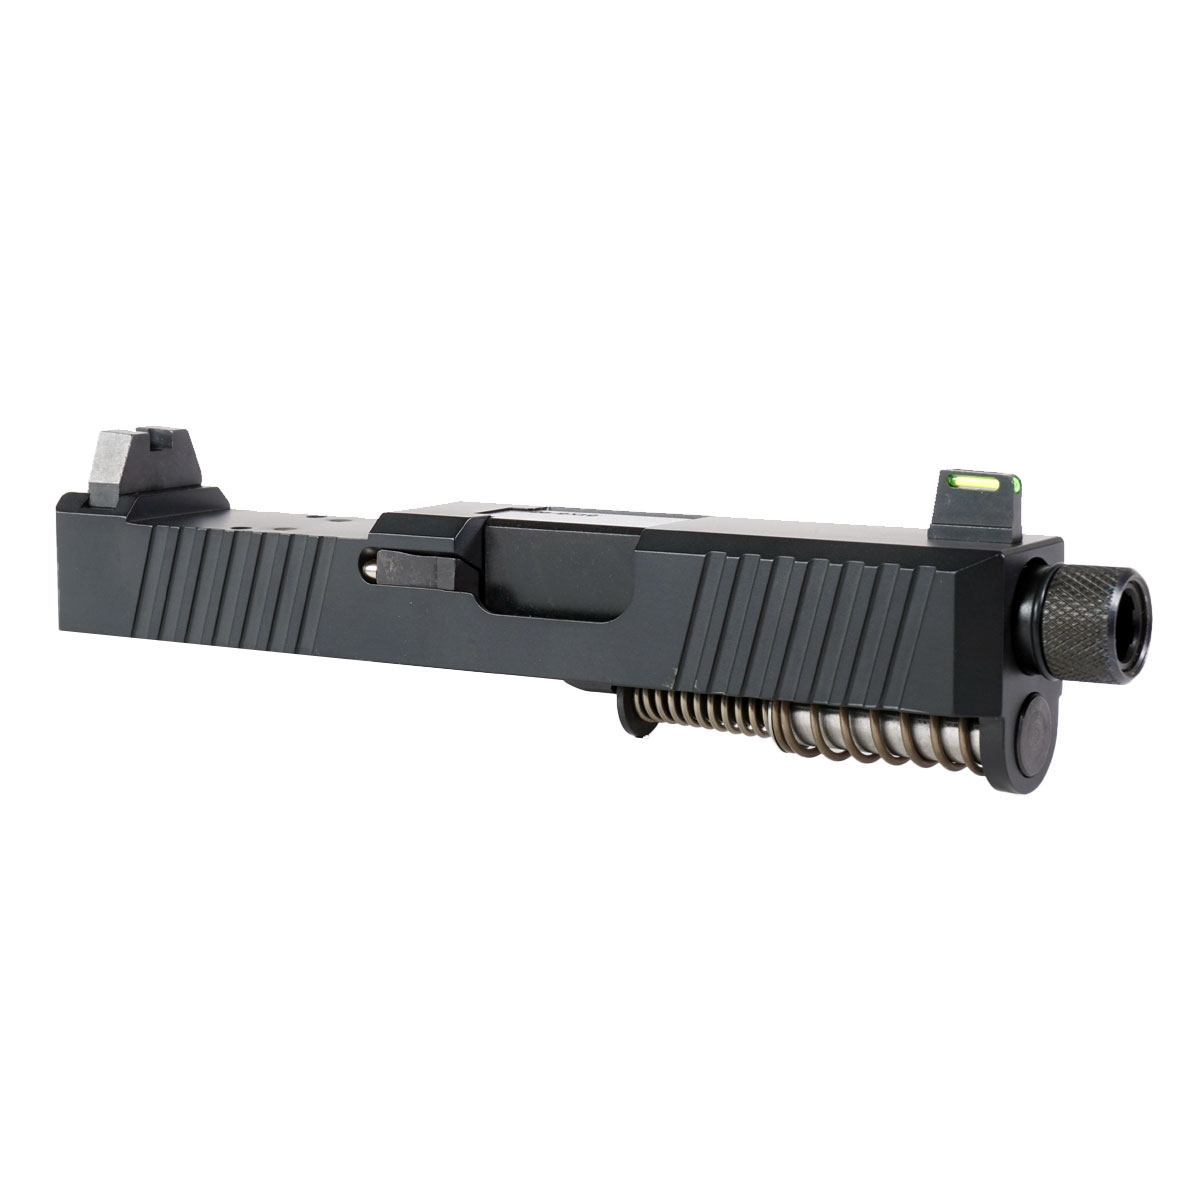 DDS 'Creature Fear' 9mm Complete Slide Kit - Glock 26 Gen 1-3 Compatible